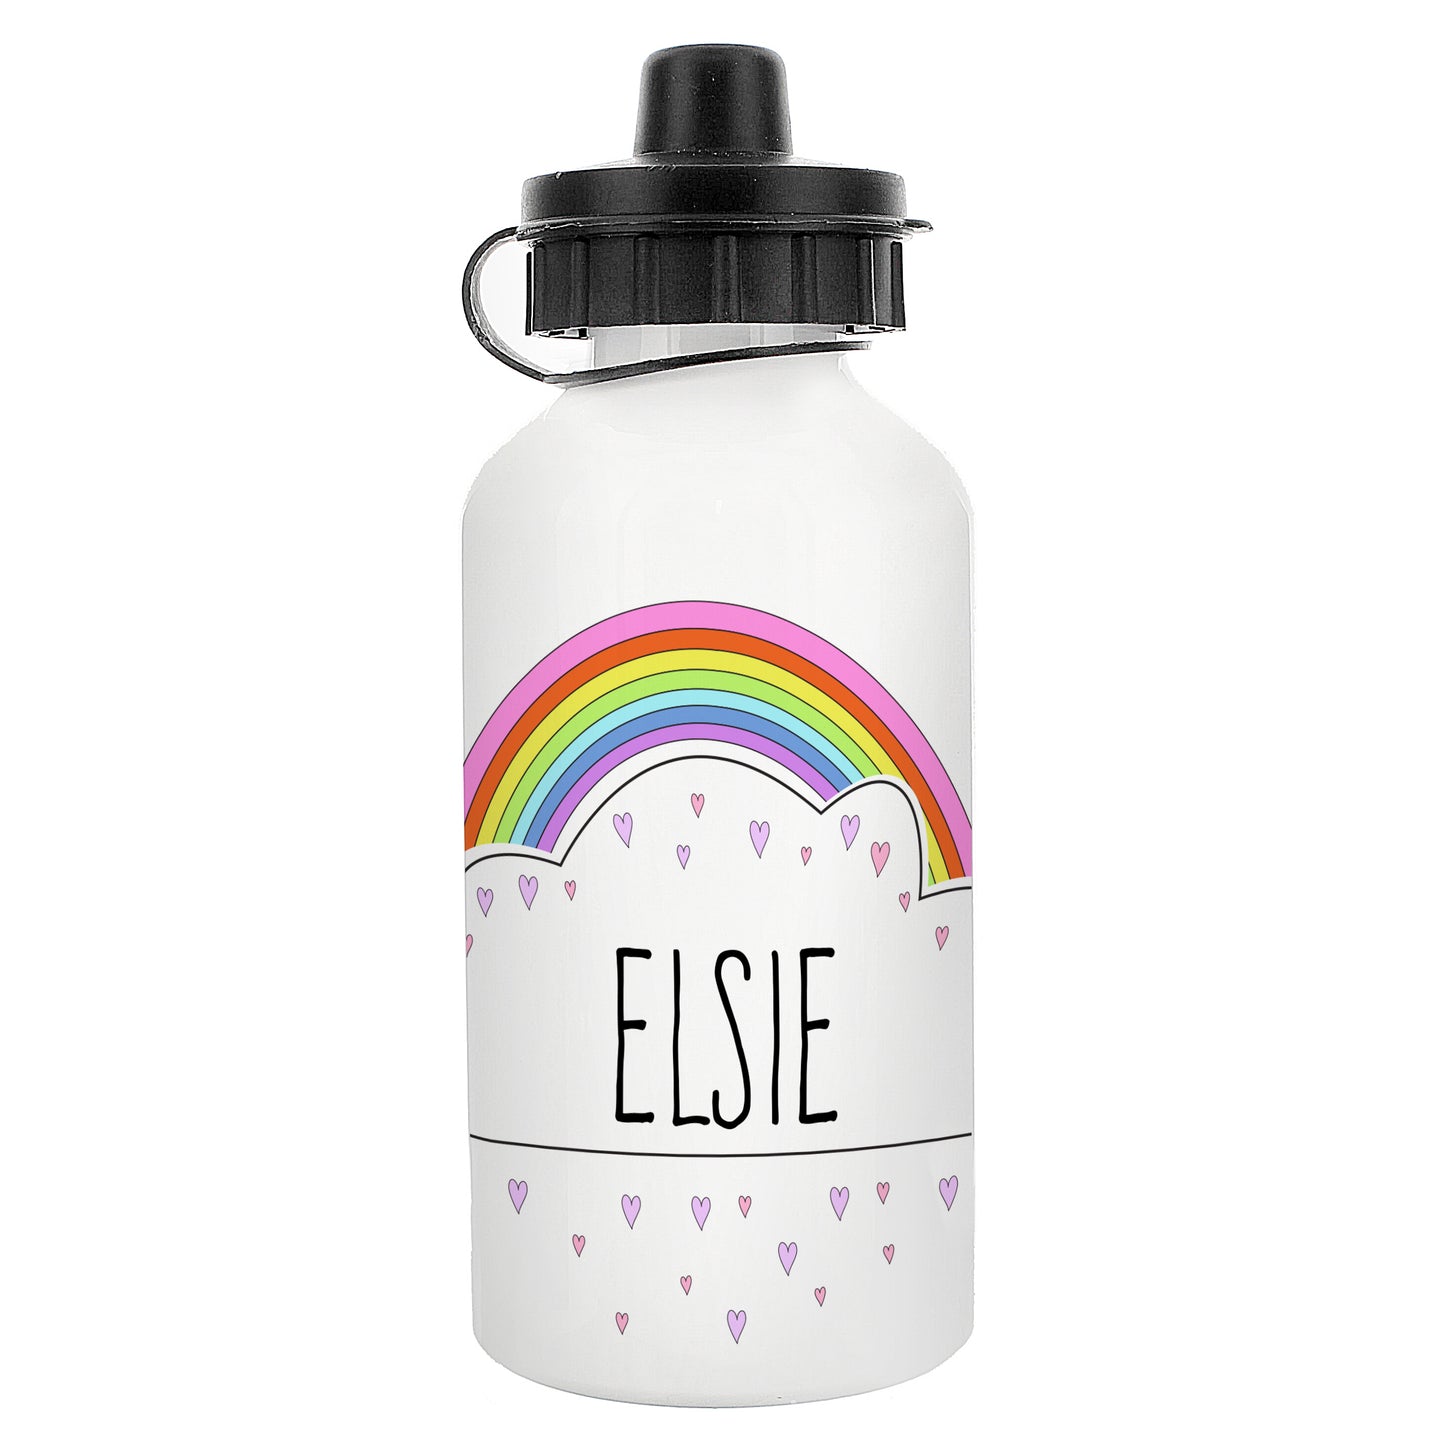 Personalised Rainbow Drinks Bottle - Personalise It!